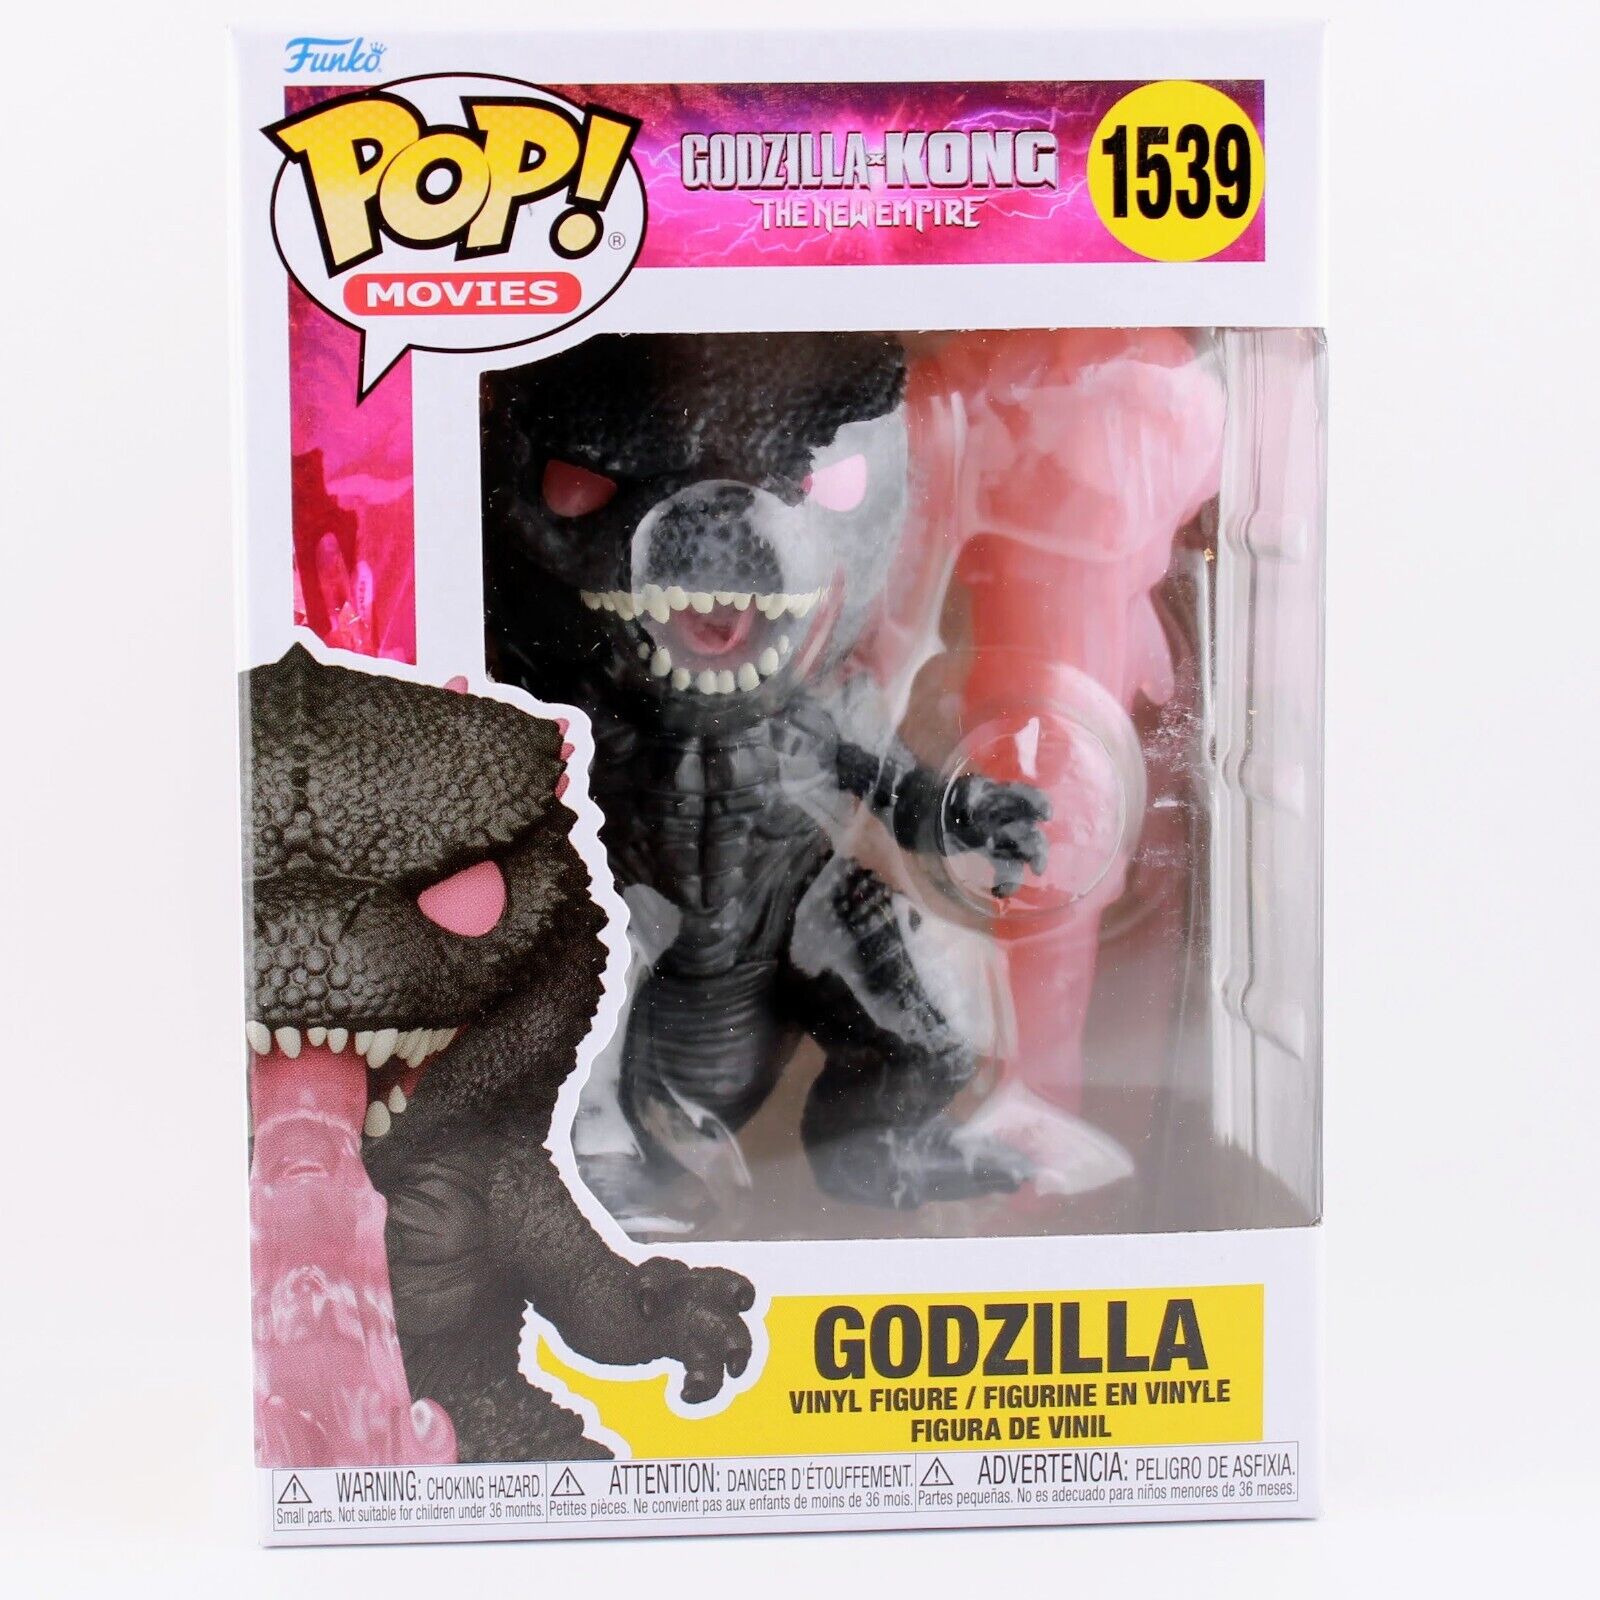 Funko Pop Heat Ray Godzilla x Kong: The New Empire 2024 Figure # 1539